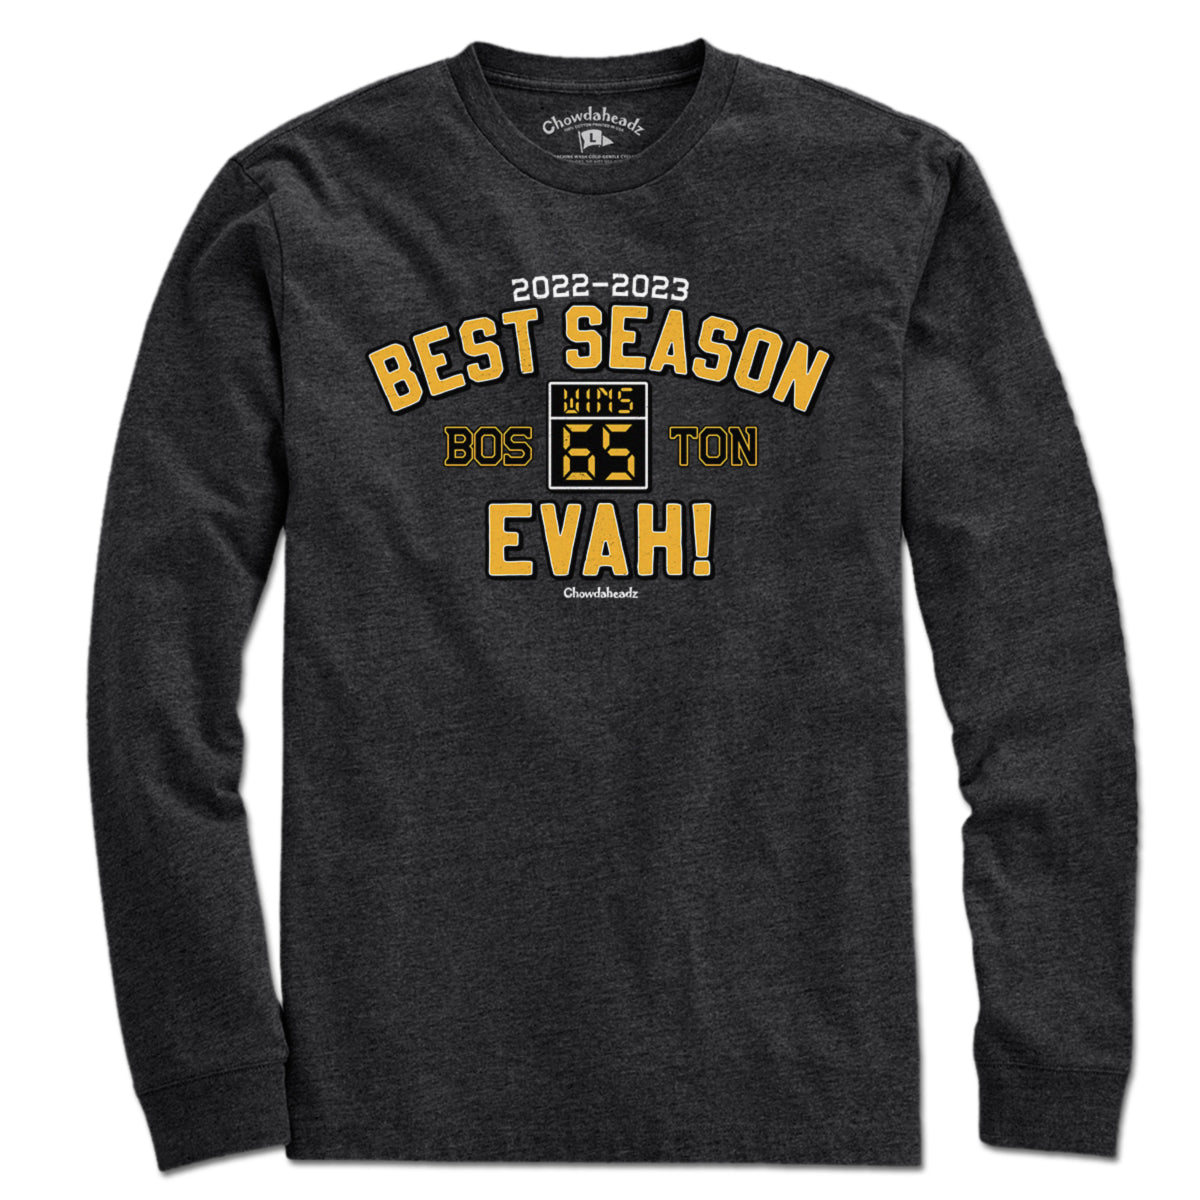 Best Season Evah 65 Wins T-shirt - Chowdaheadz